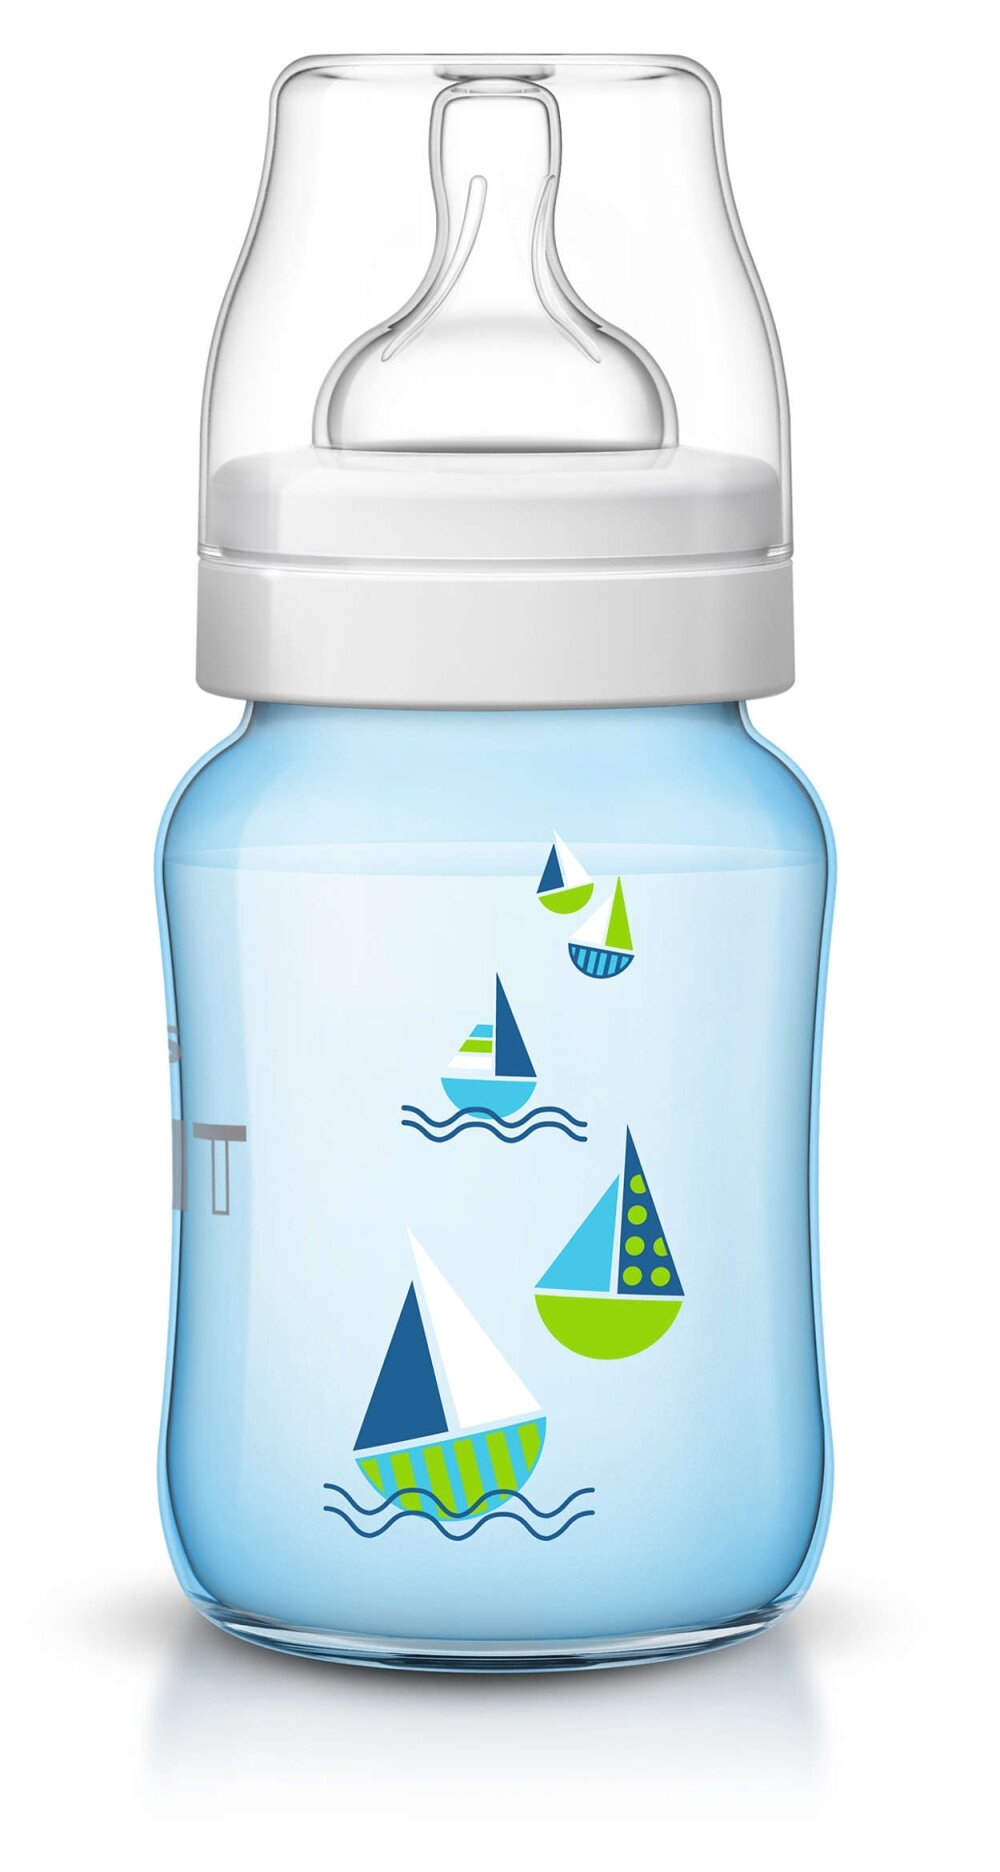 avent-classic-plus-blue-boats-bottle-9oz-twin-pack-www.aventstore.com-2-.jpg